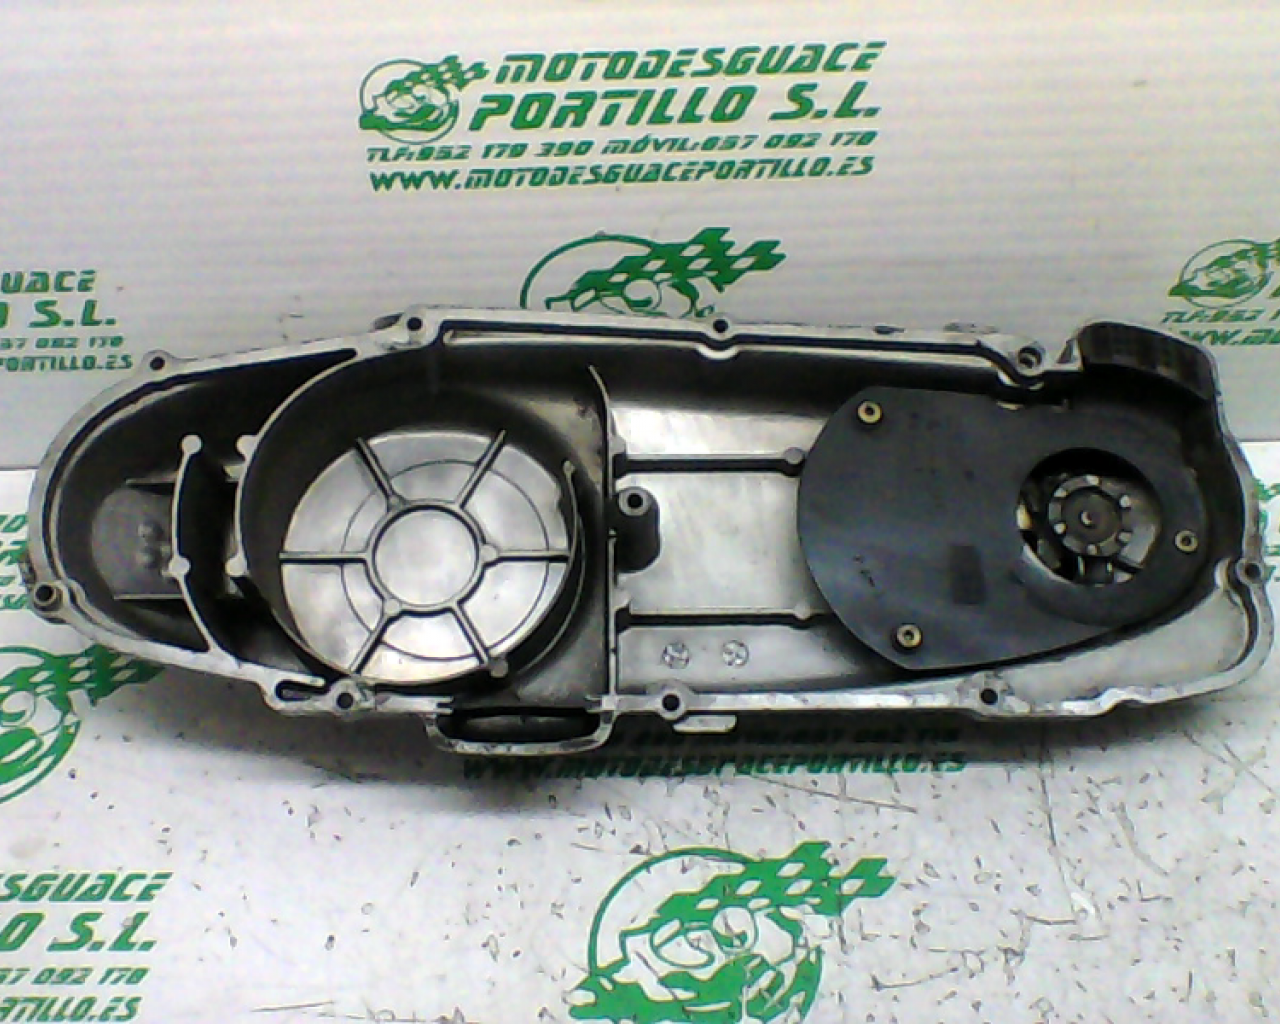 Moto Desguace Portillo - Tapa de cárter Derbi Atlantis 50 (1996-2000)